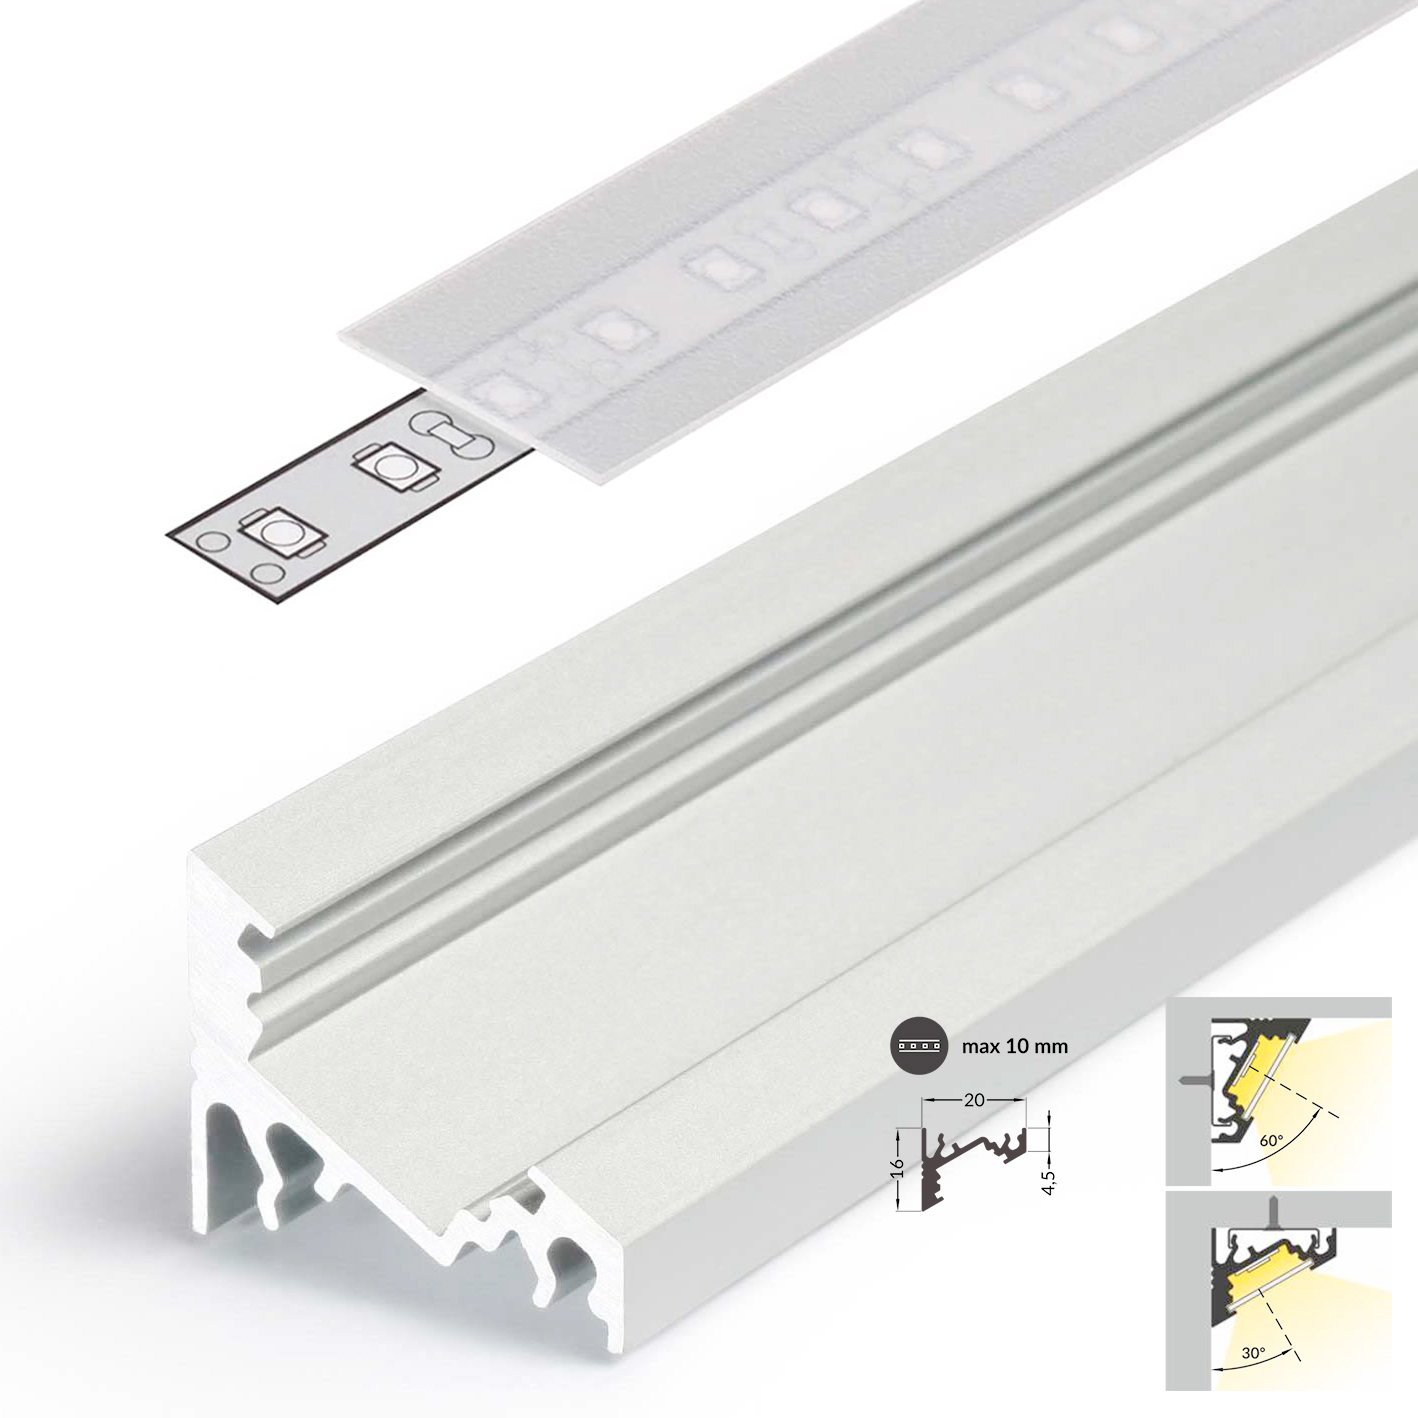 LED Aluminium Eckprofil Set CORNER 10mm (2m) eloxiert inkl. Blende  (raureif/diffus), Befestigungsclips und Endkappen für LED-Streifen/indirekte  Beleuchtung-522068